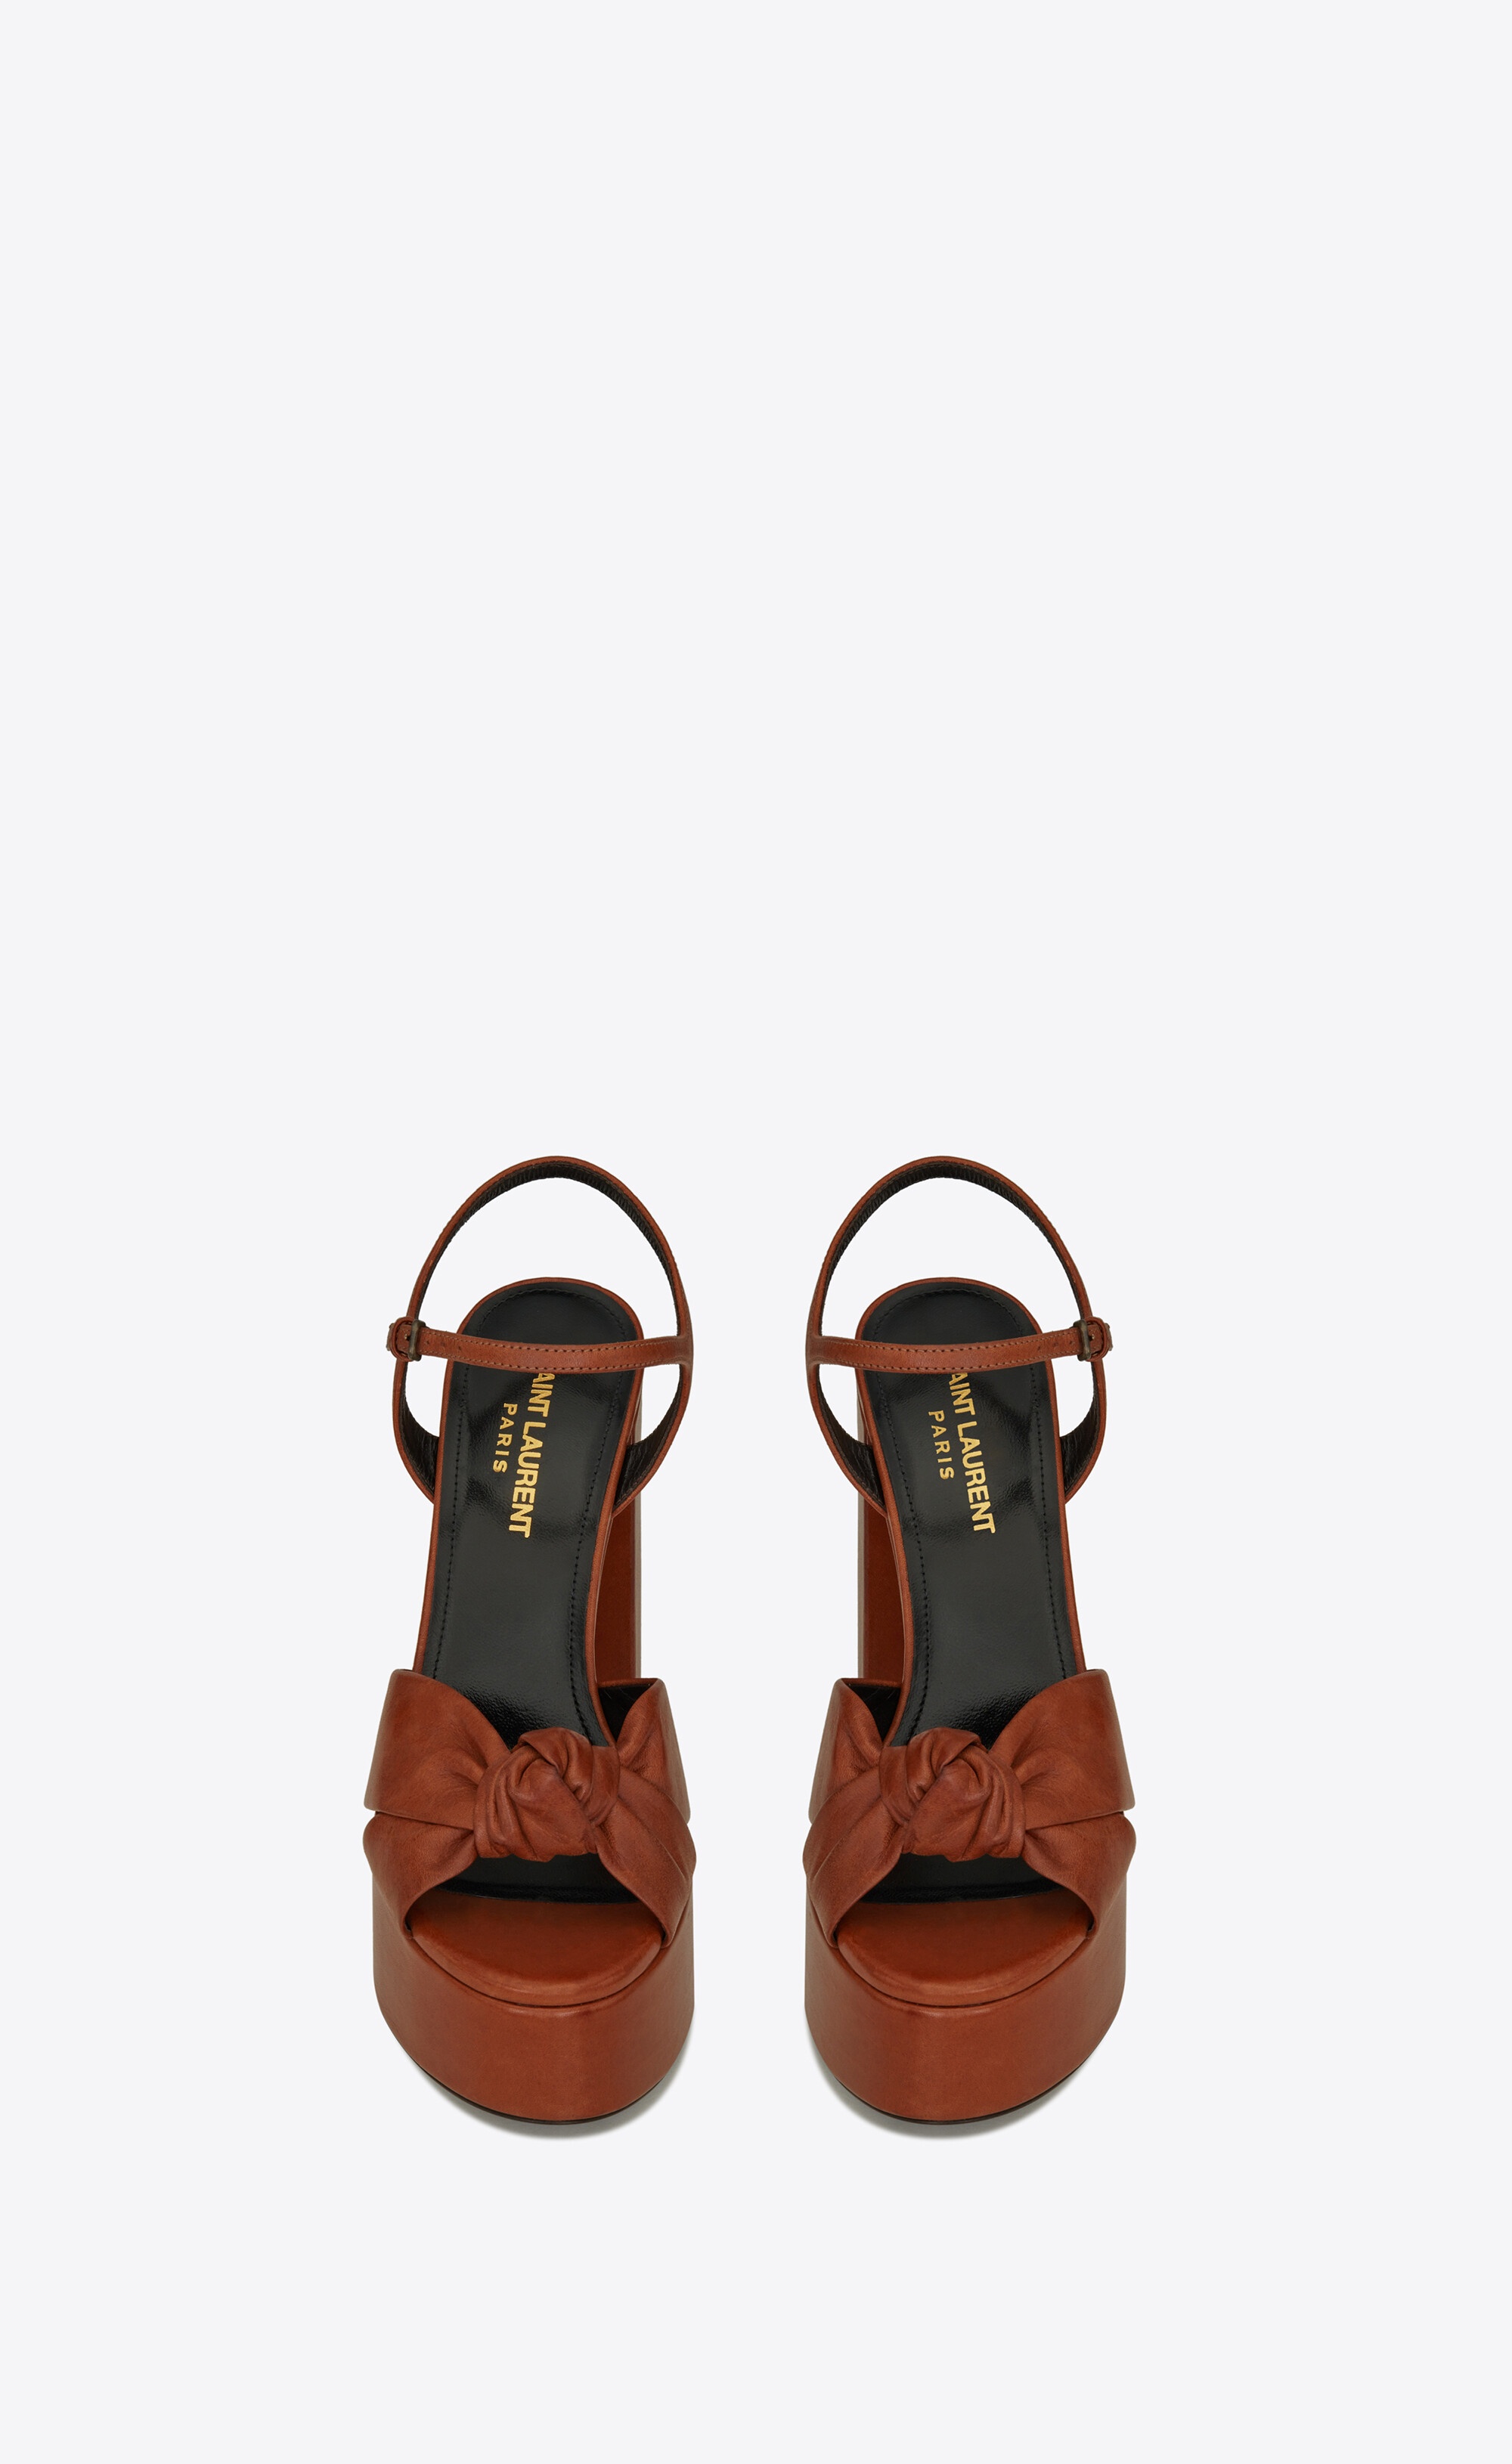 bianca platform sandals in smooth leather - 2